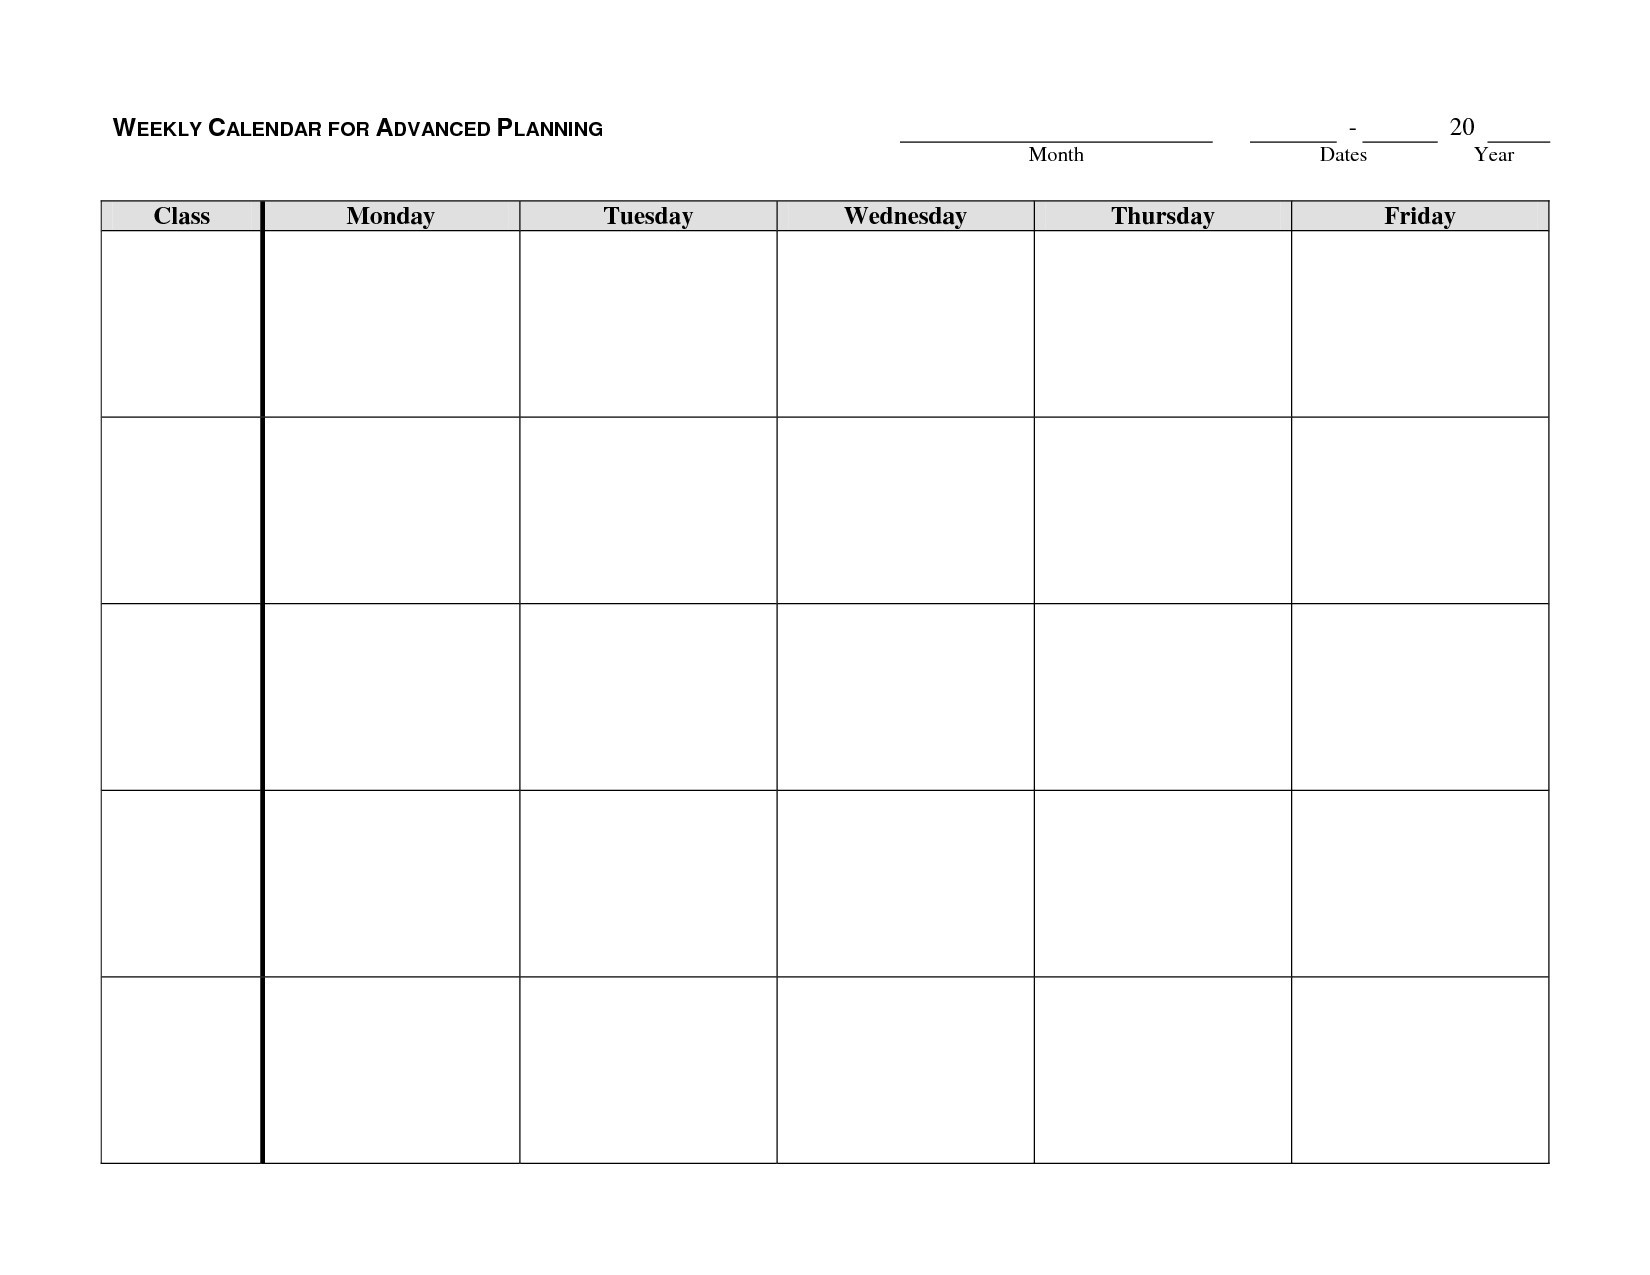 MondayFriday Blank Weekly Schedule Calendar Template Printable